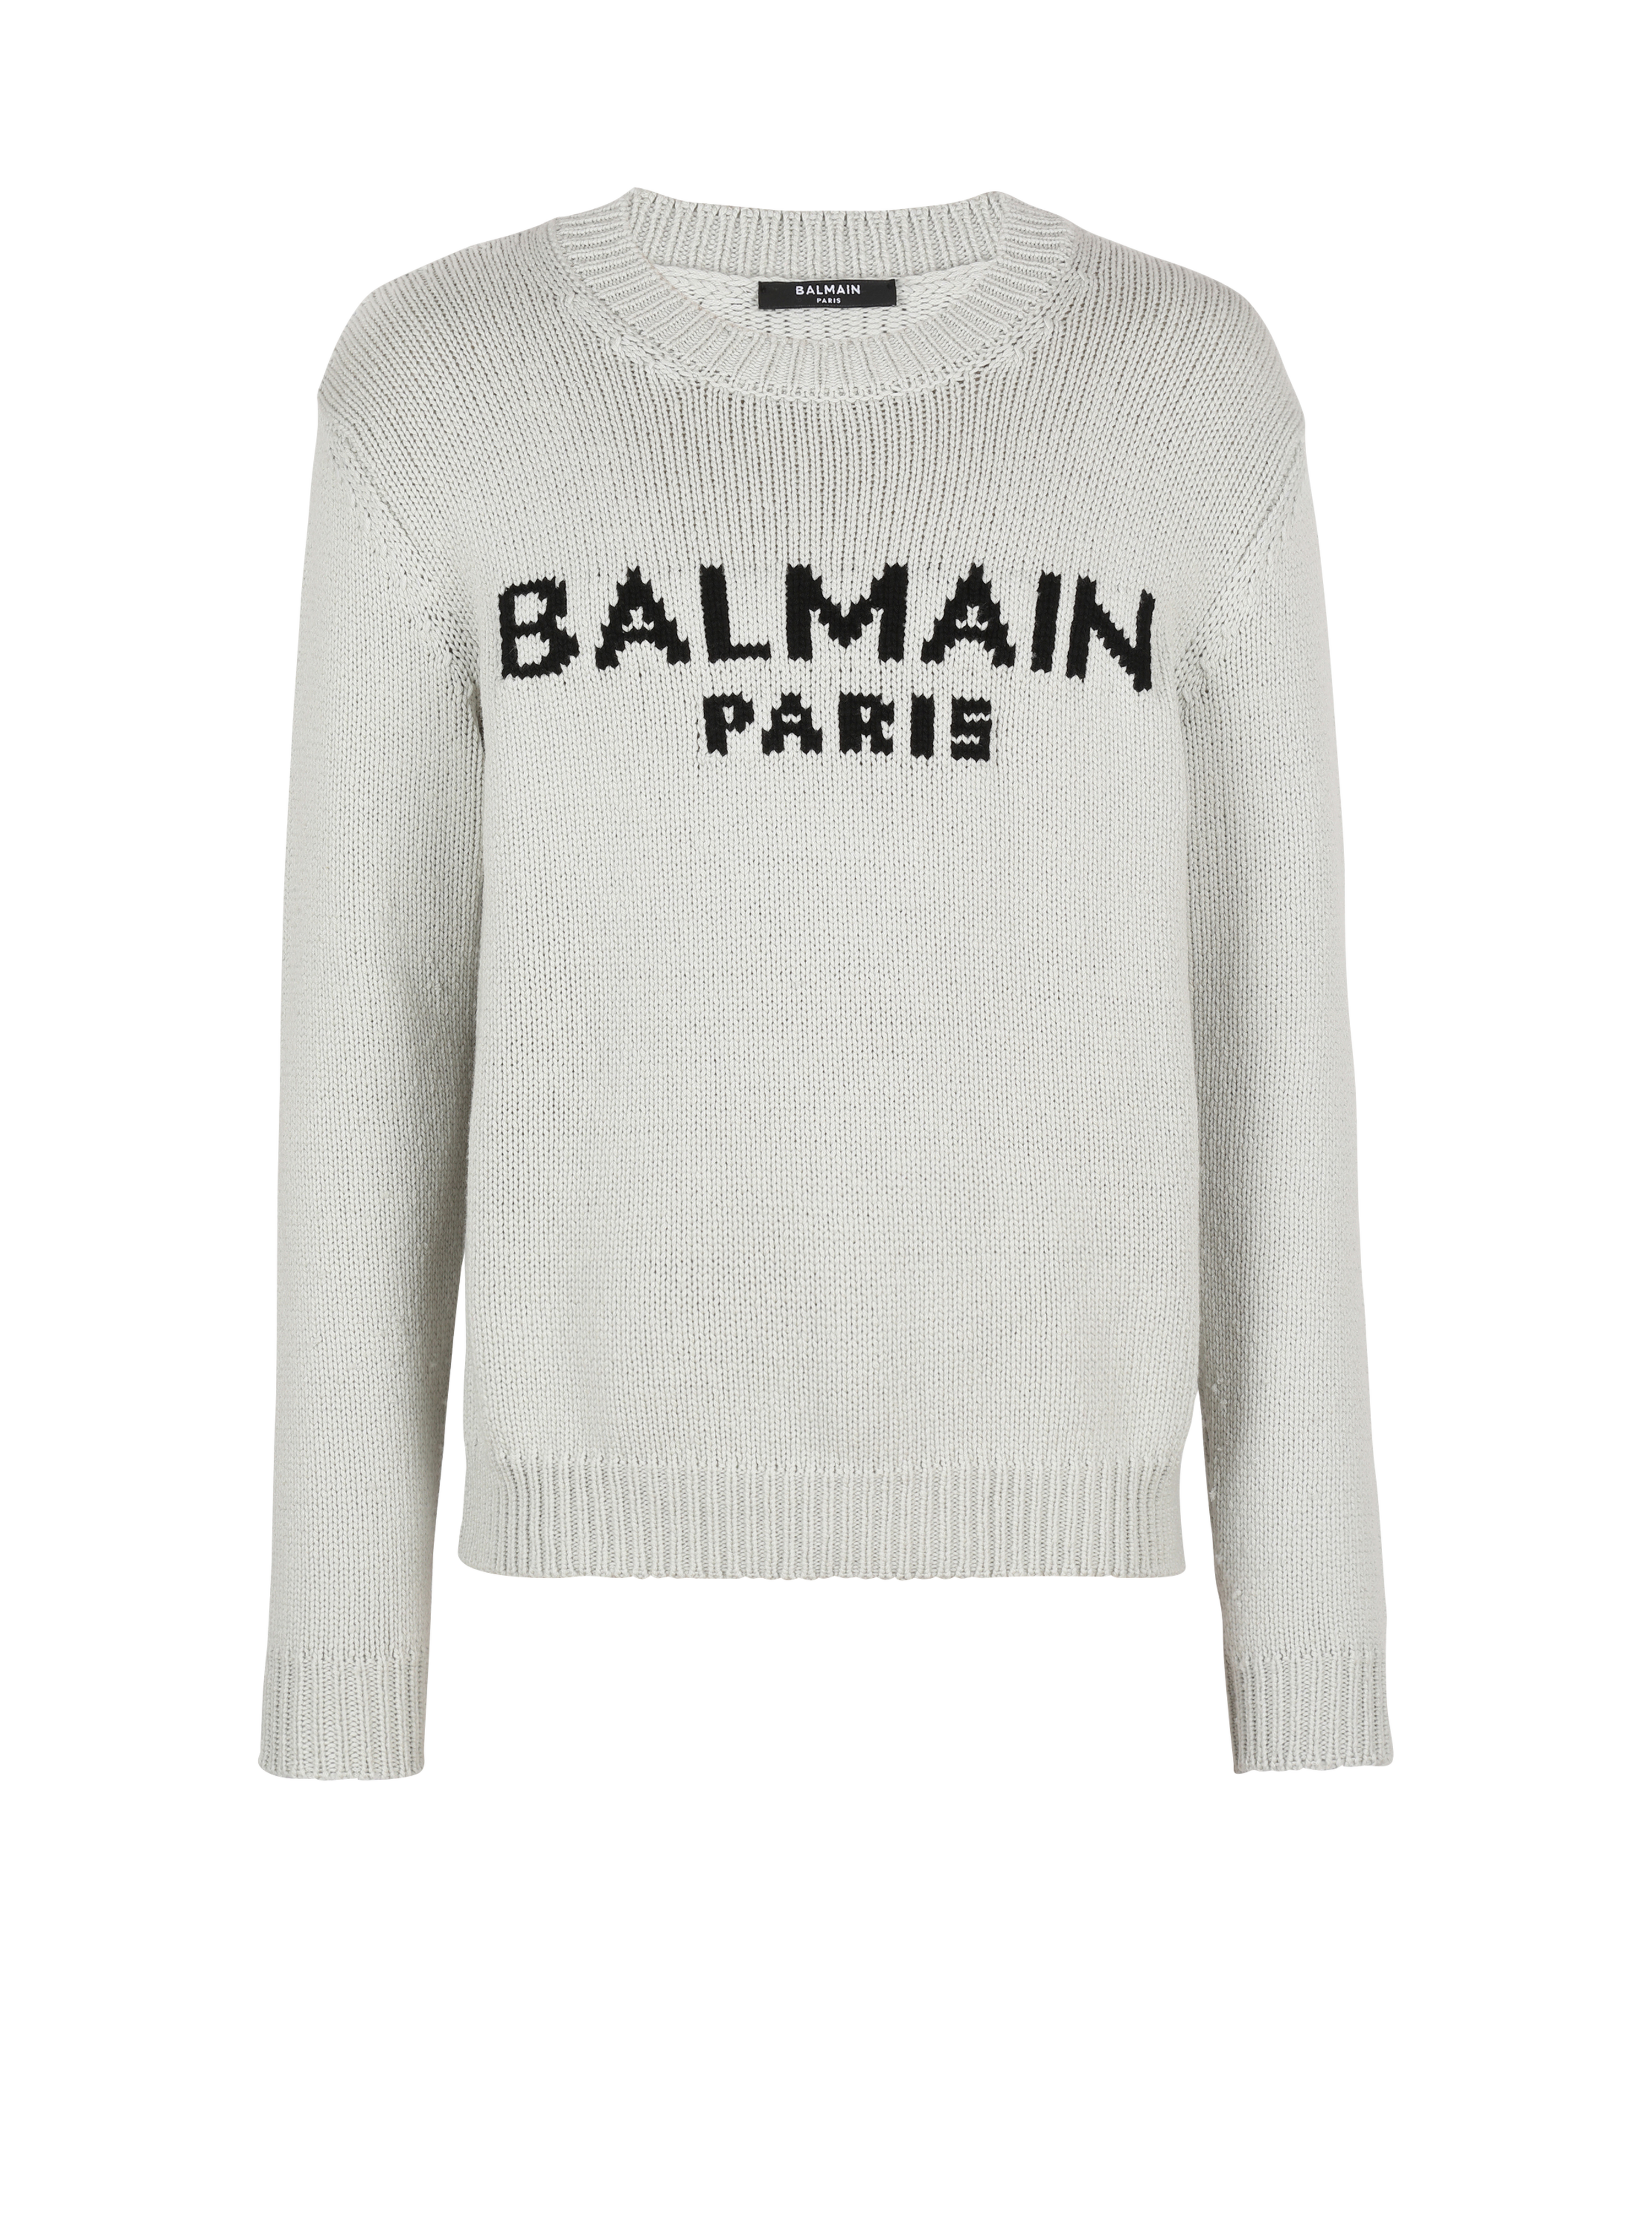 Balmain Paris 로고 장식 울 스웨터, 회색